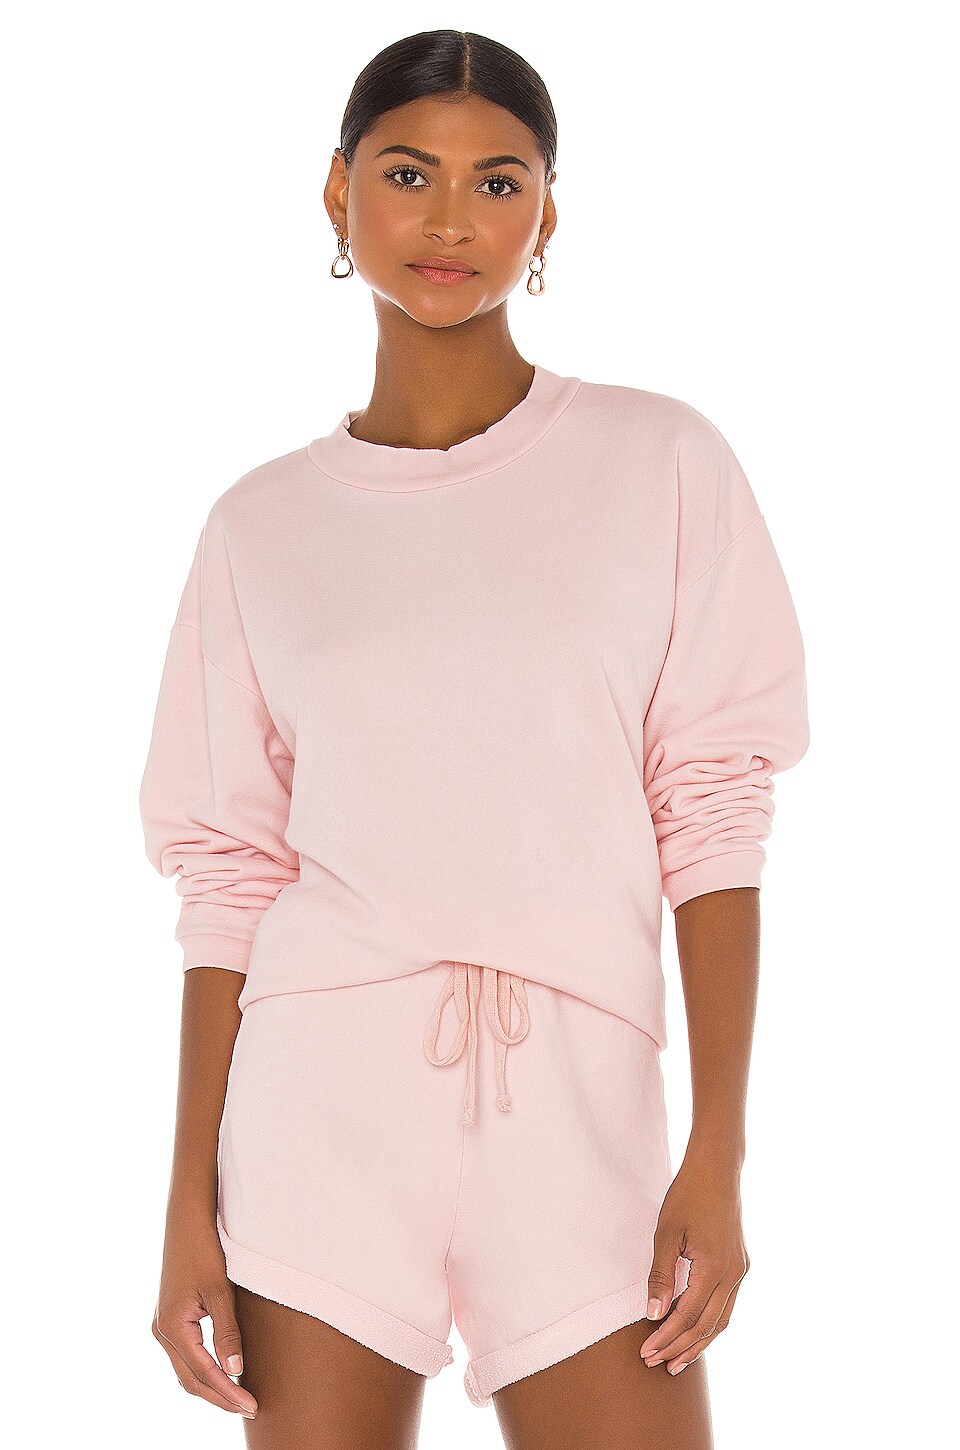 LNA 运动衫 – 粉红胭脂系列,LNA-WK179